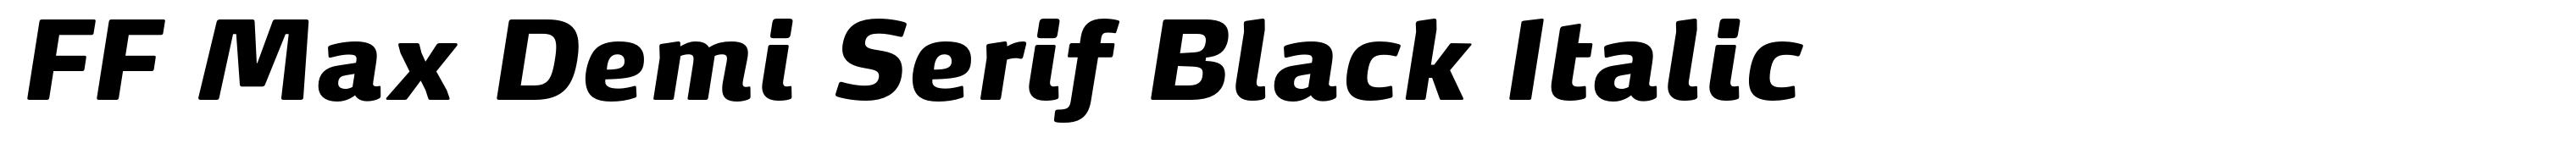 FF Max Demi Serif Black Italic